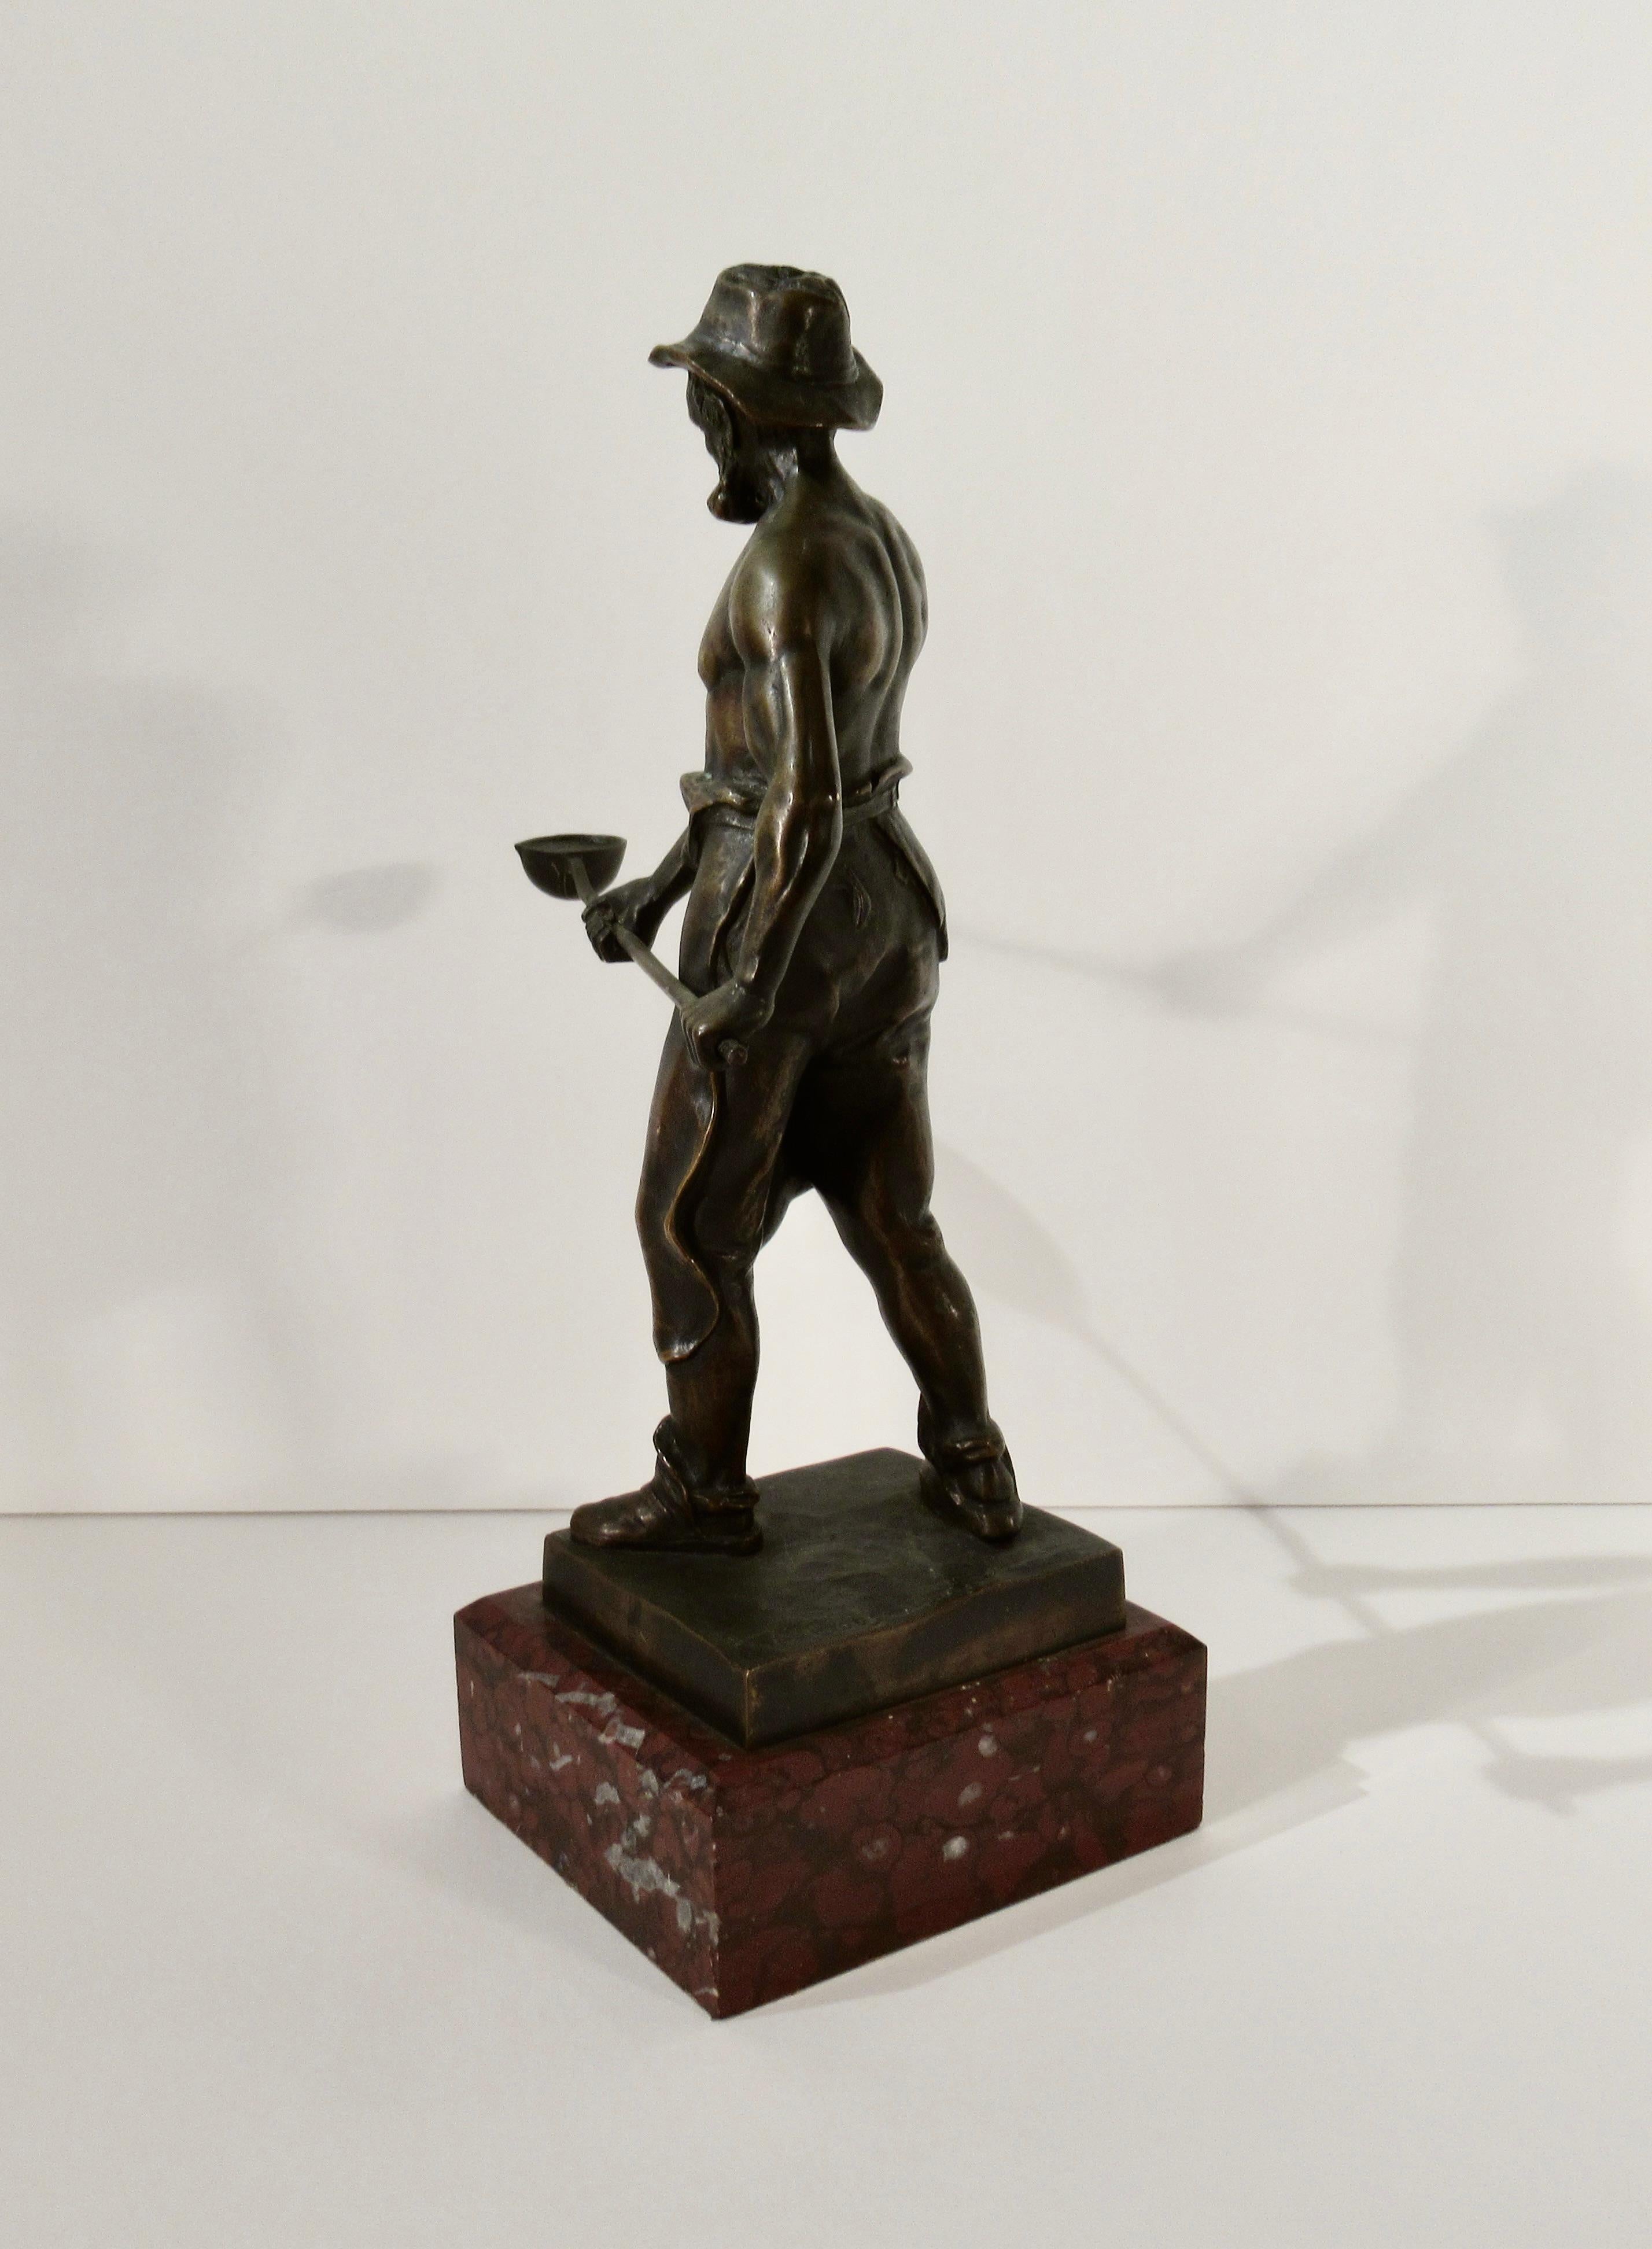 The Foundry Worker - Sculpture by Albert Caasmann